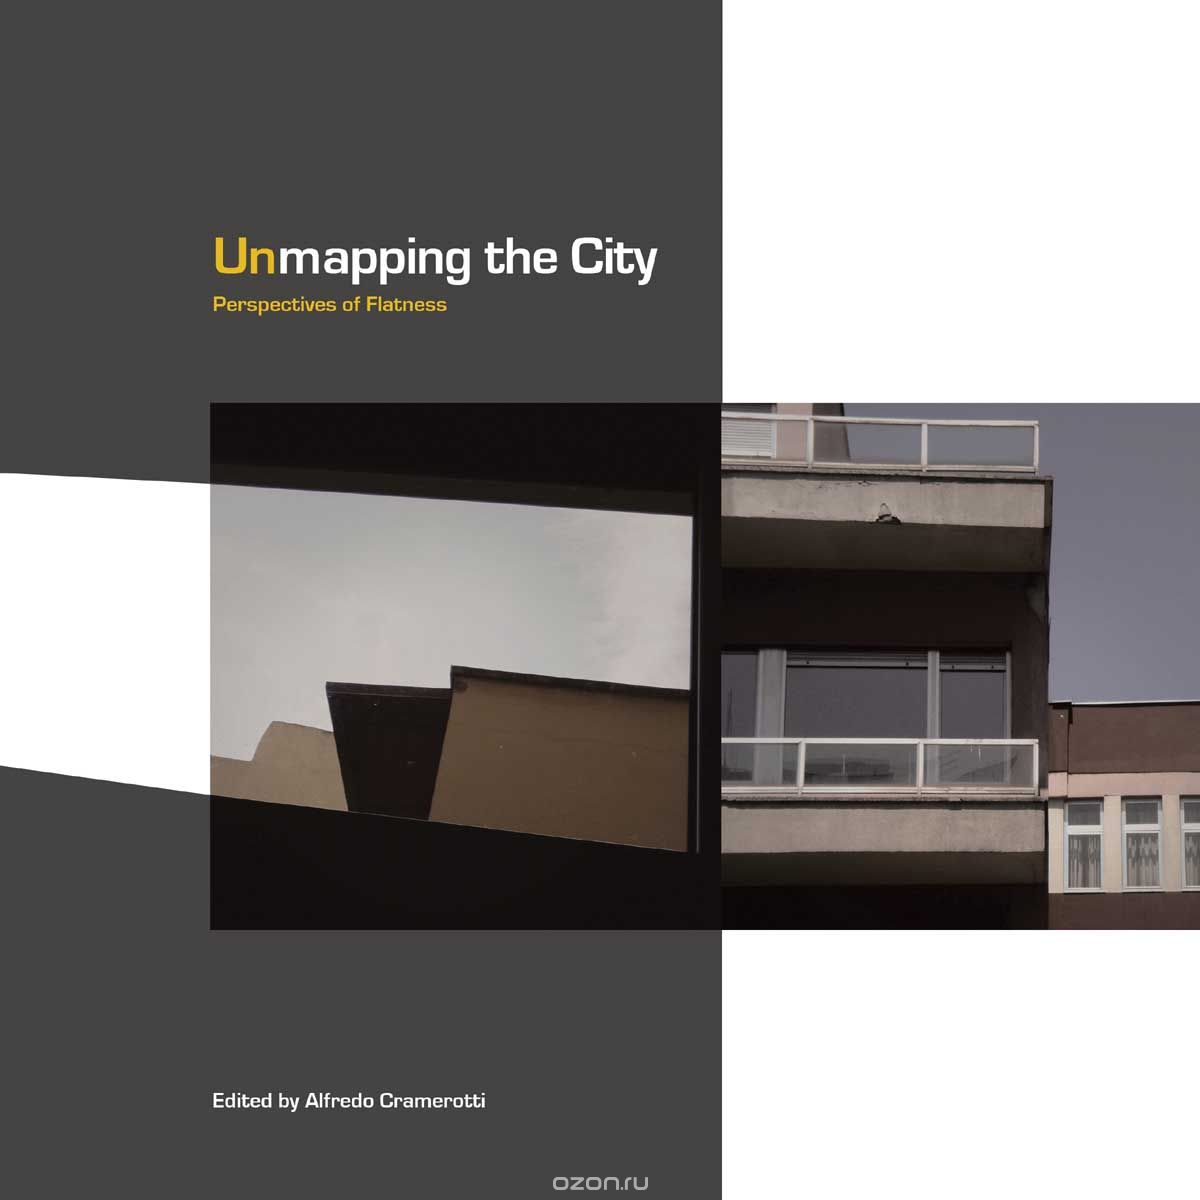 Скачать книгу "Unmapping the City – Perspectives of Flatness"